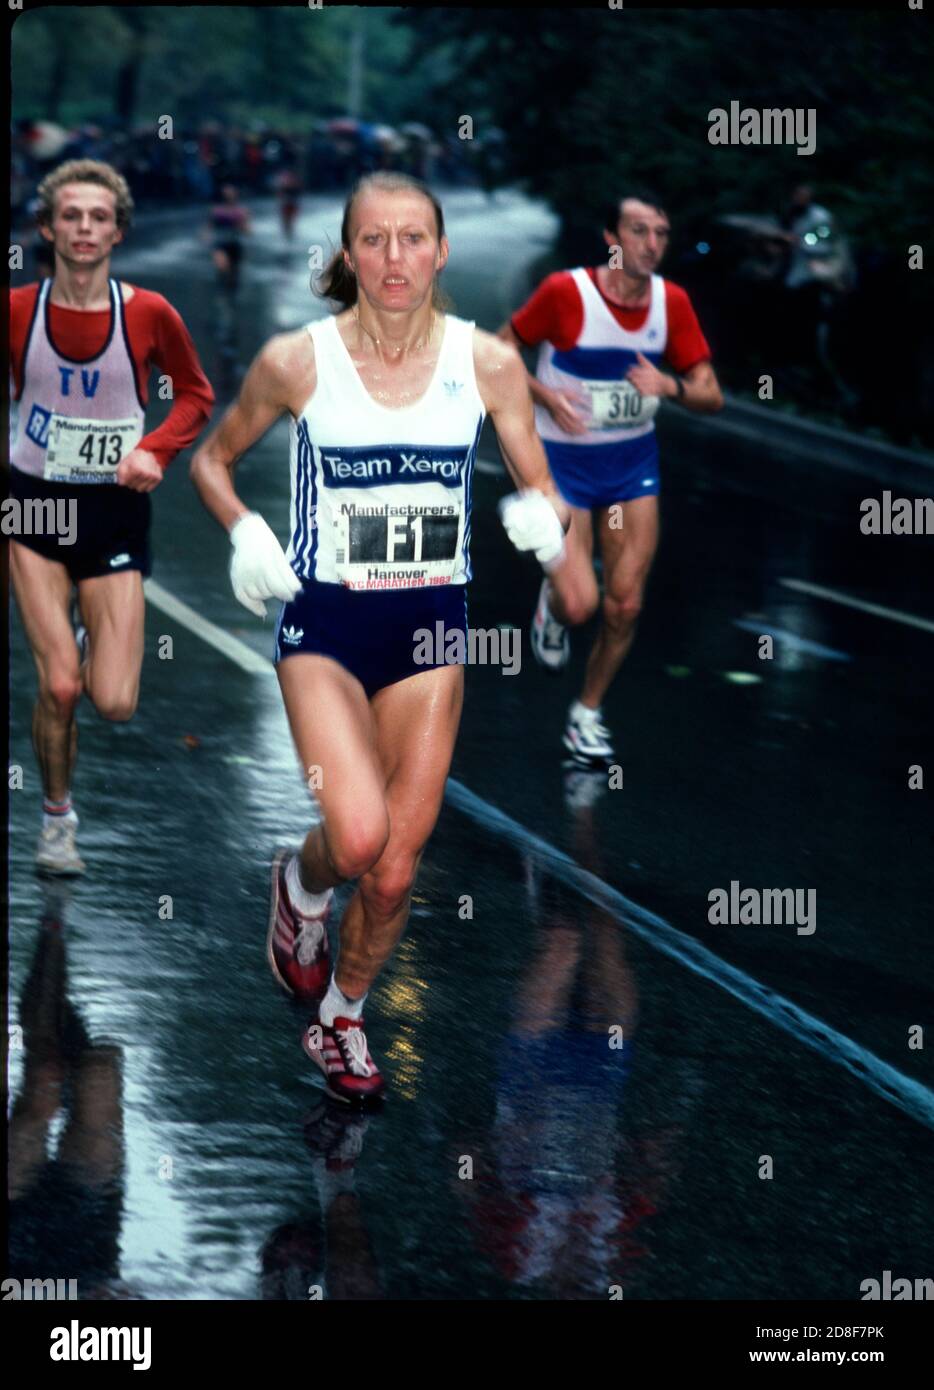 Norwegian marathon runner Grete Waitz running in the rain in Central Park during the 1983 New York City Marathon which she won in New York on October 23, 1983.  Photo by Francis Specker Stock Photo